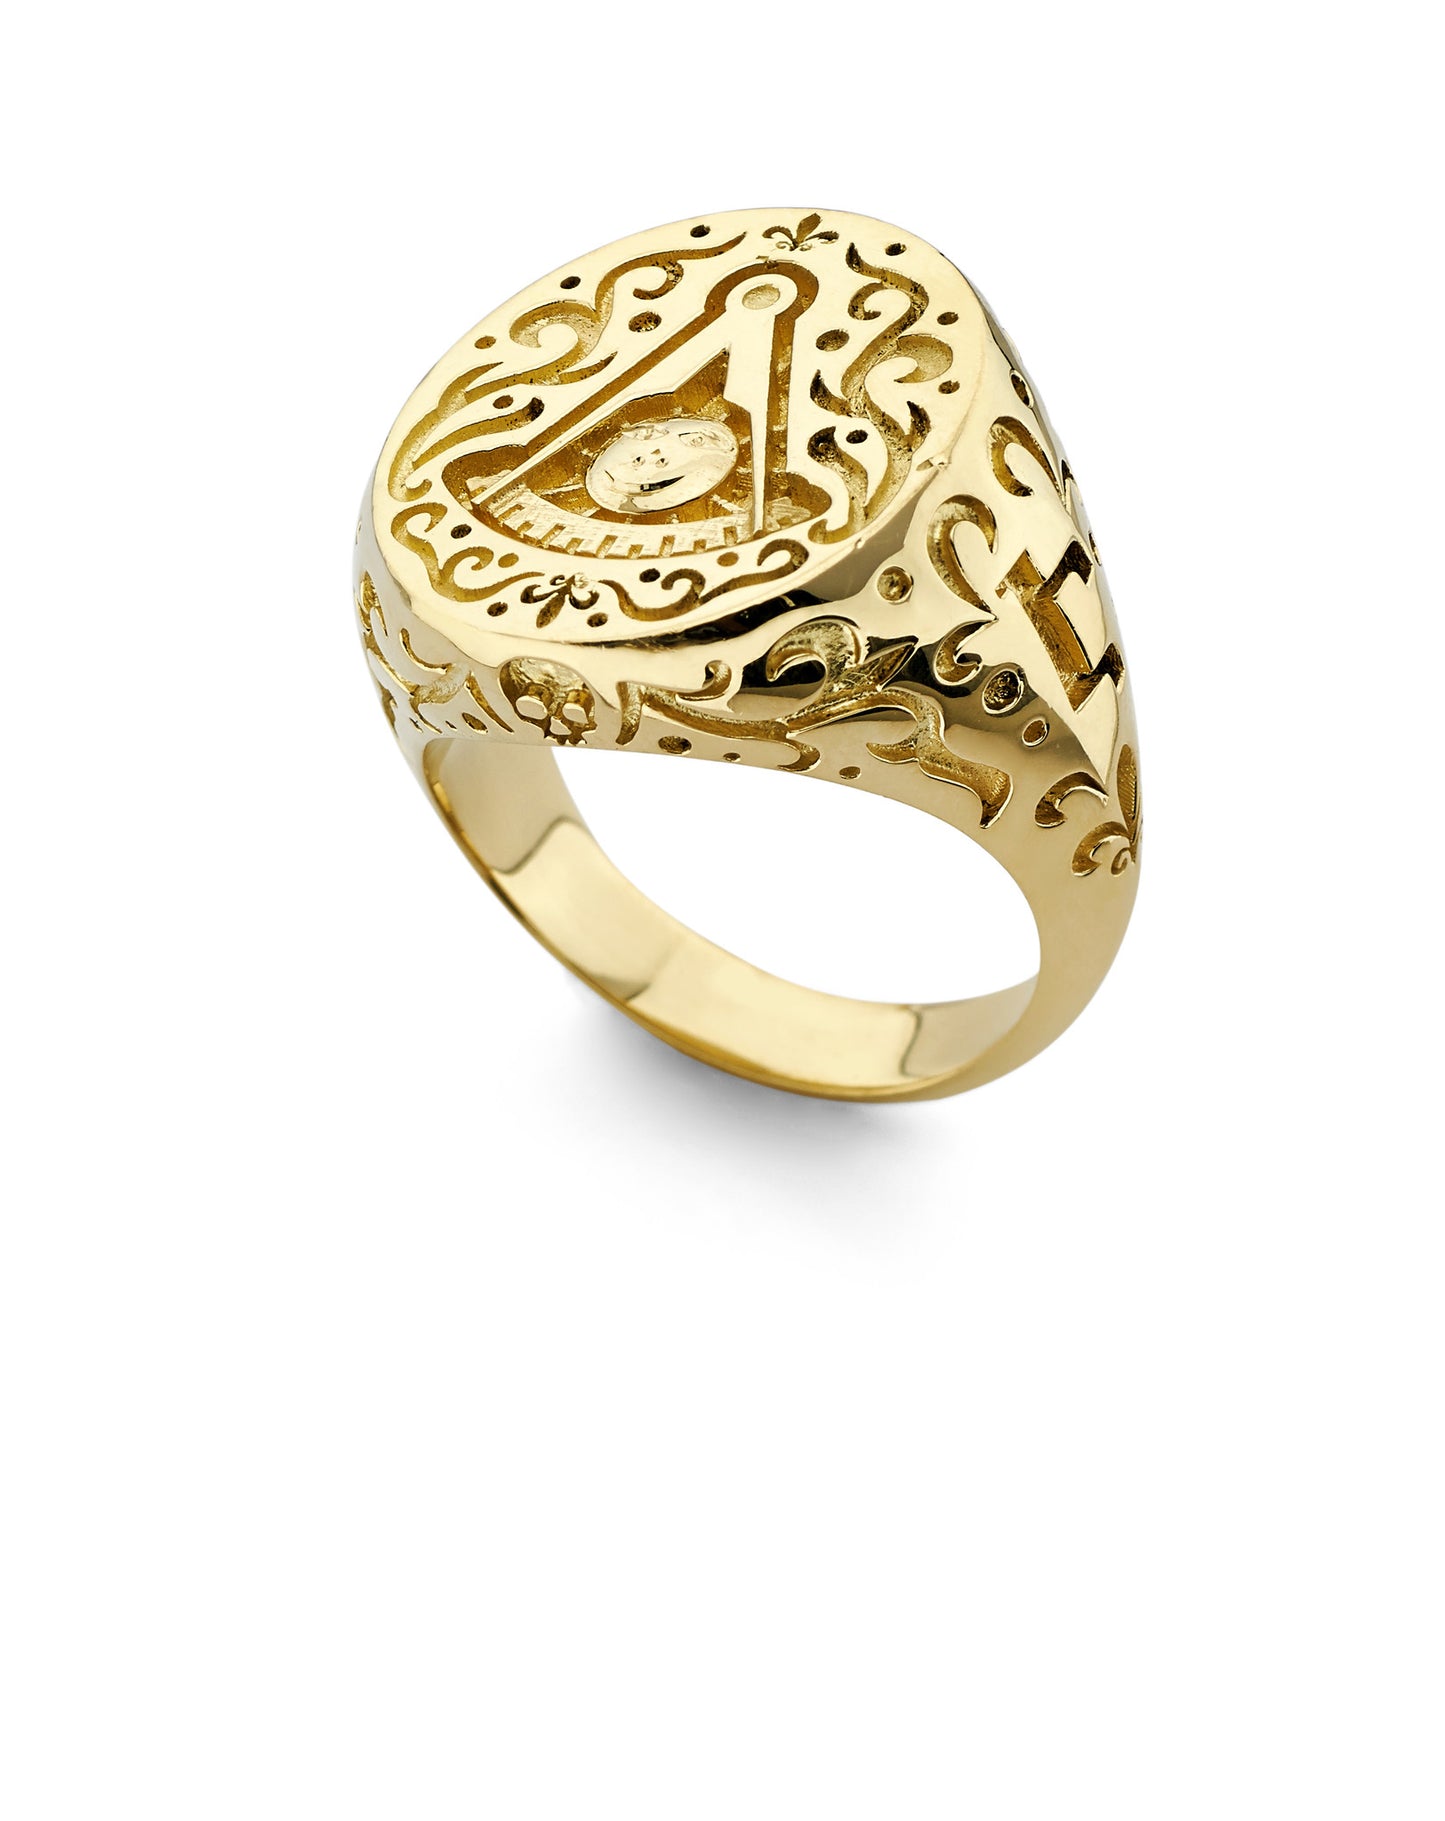 Past Master Ring, Custom Designed